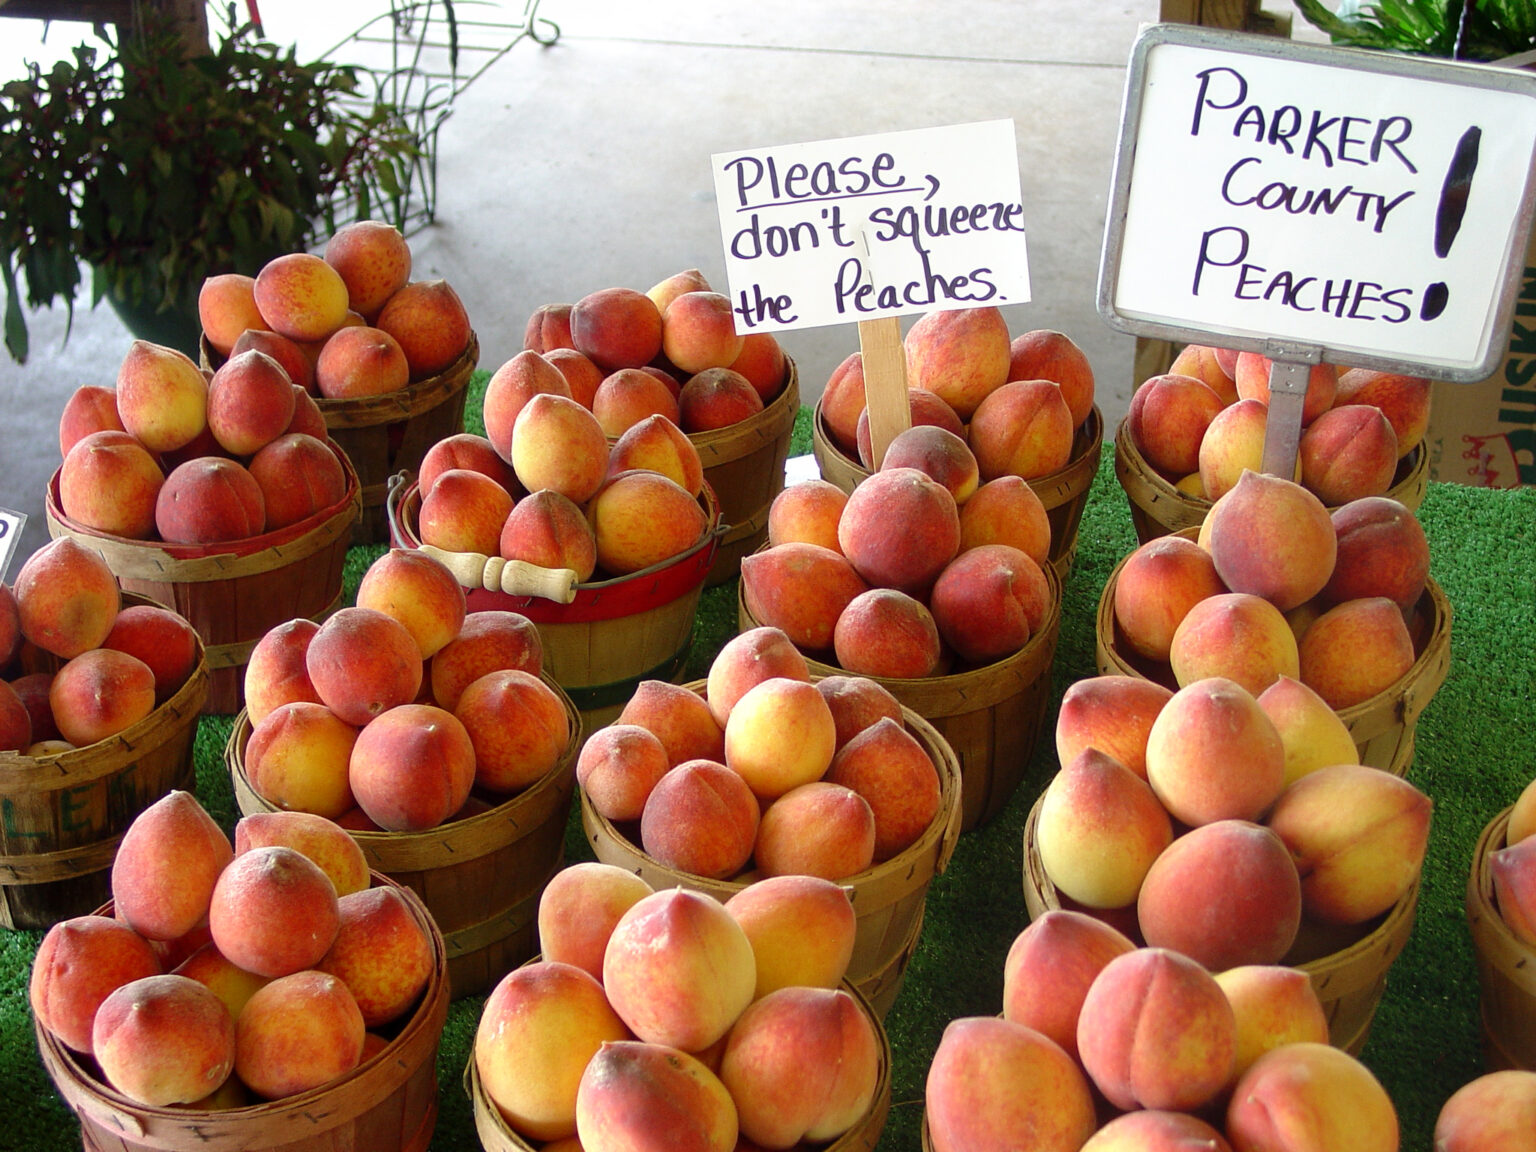 Parker County Peach Festival Expands Focus Daily News